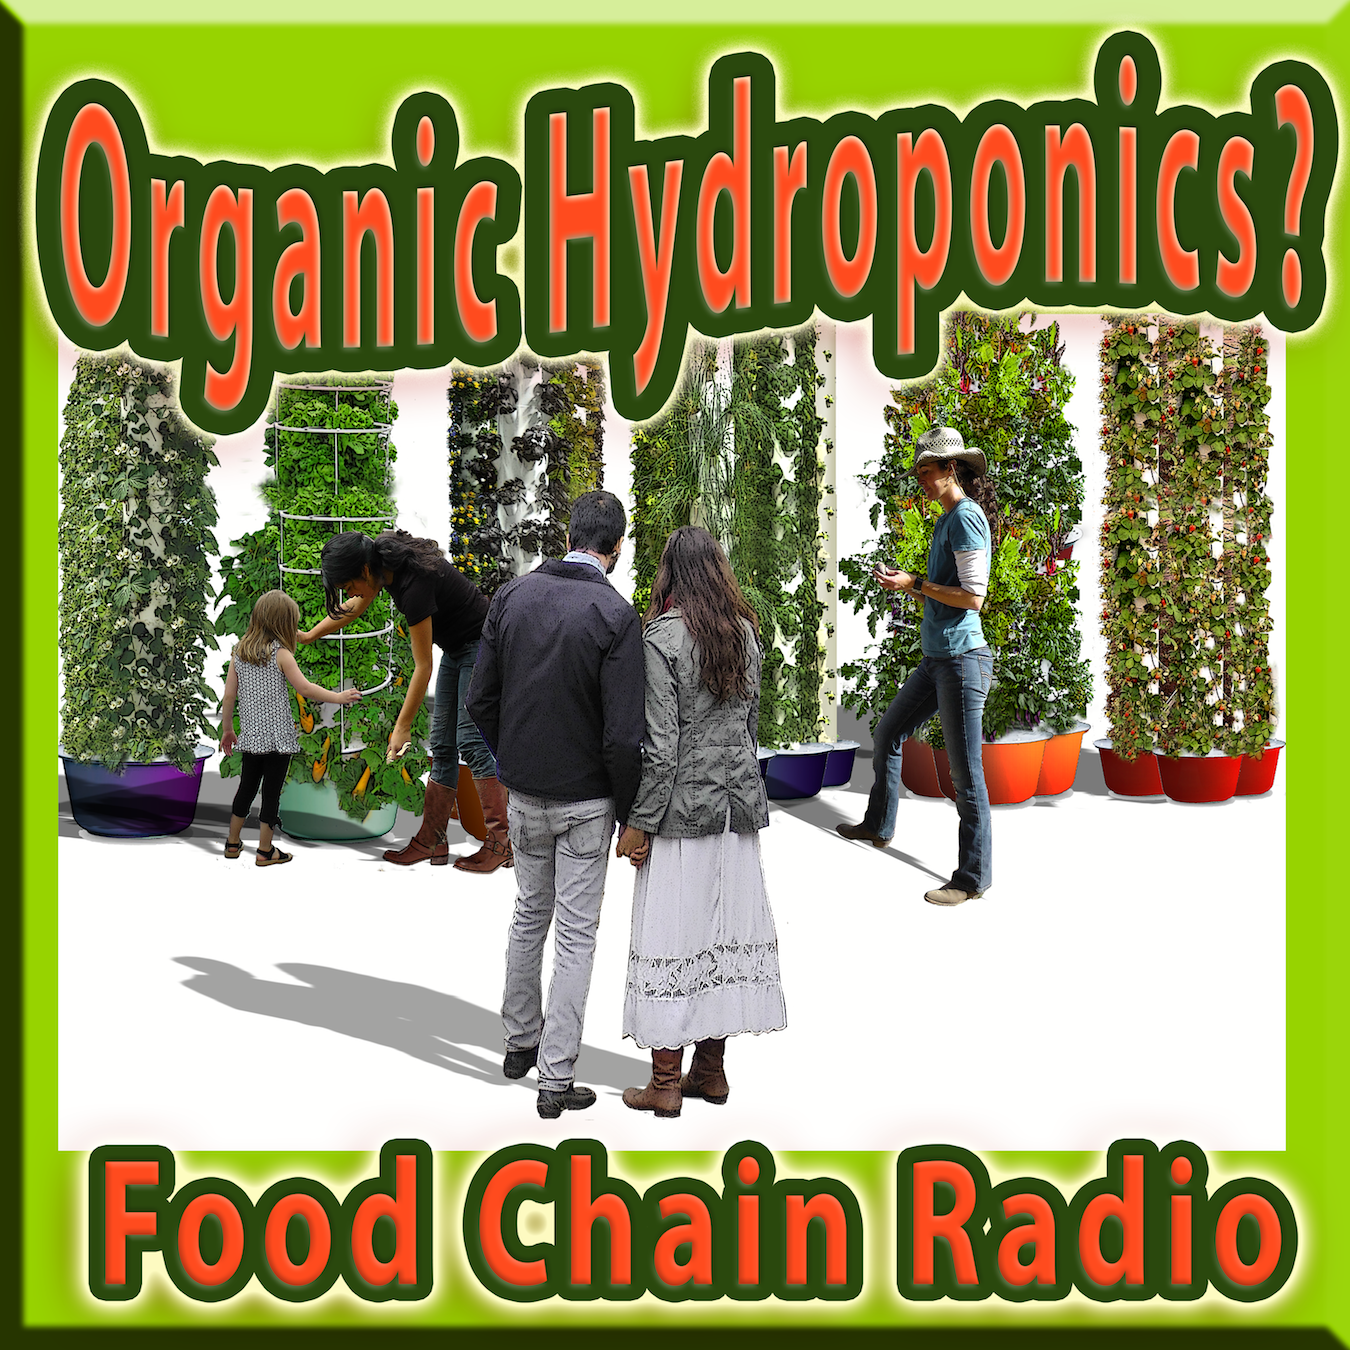 Michael Olson Food Chain Radio – Organic Hydroponics?